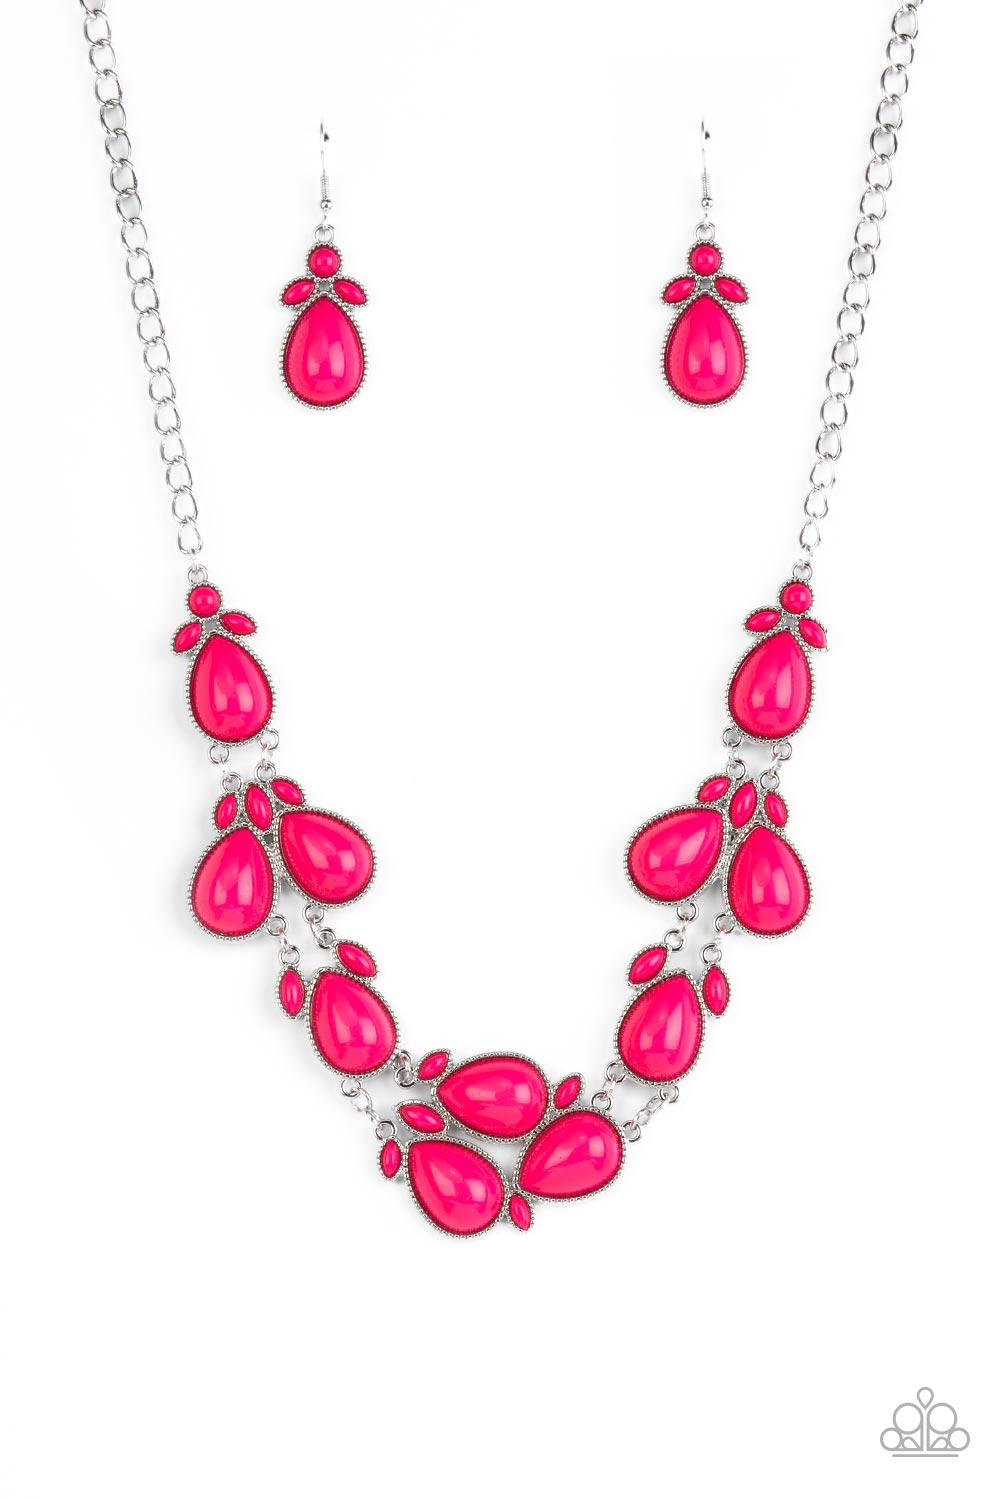 Botanical Banquet - pink - Paparazzi necklace